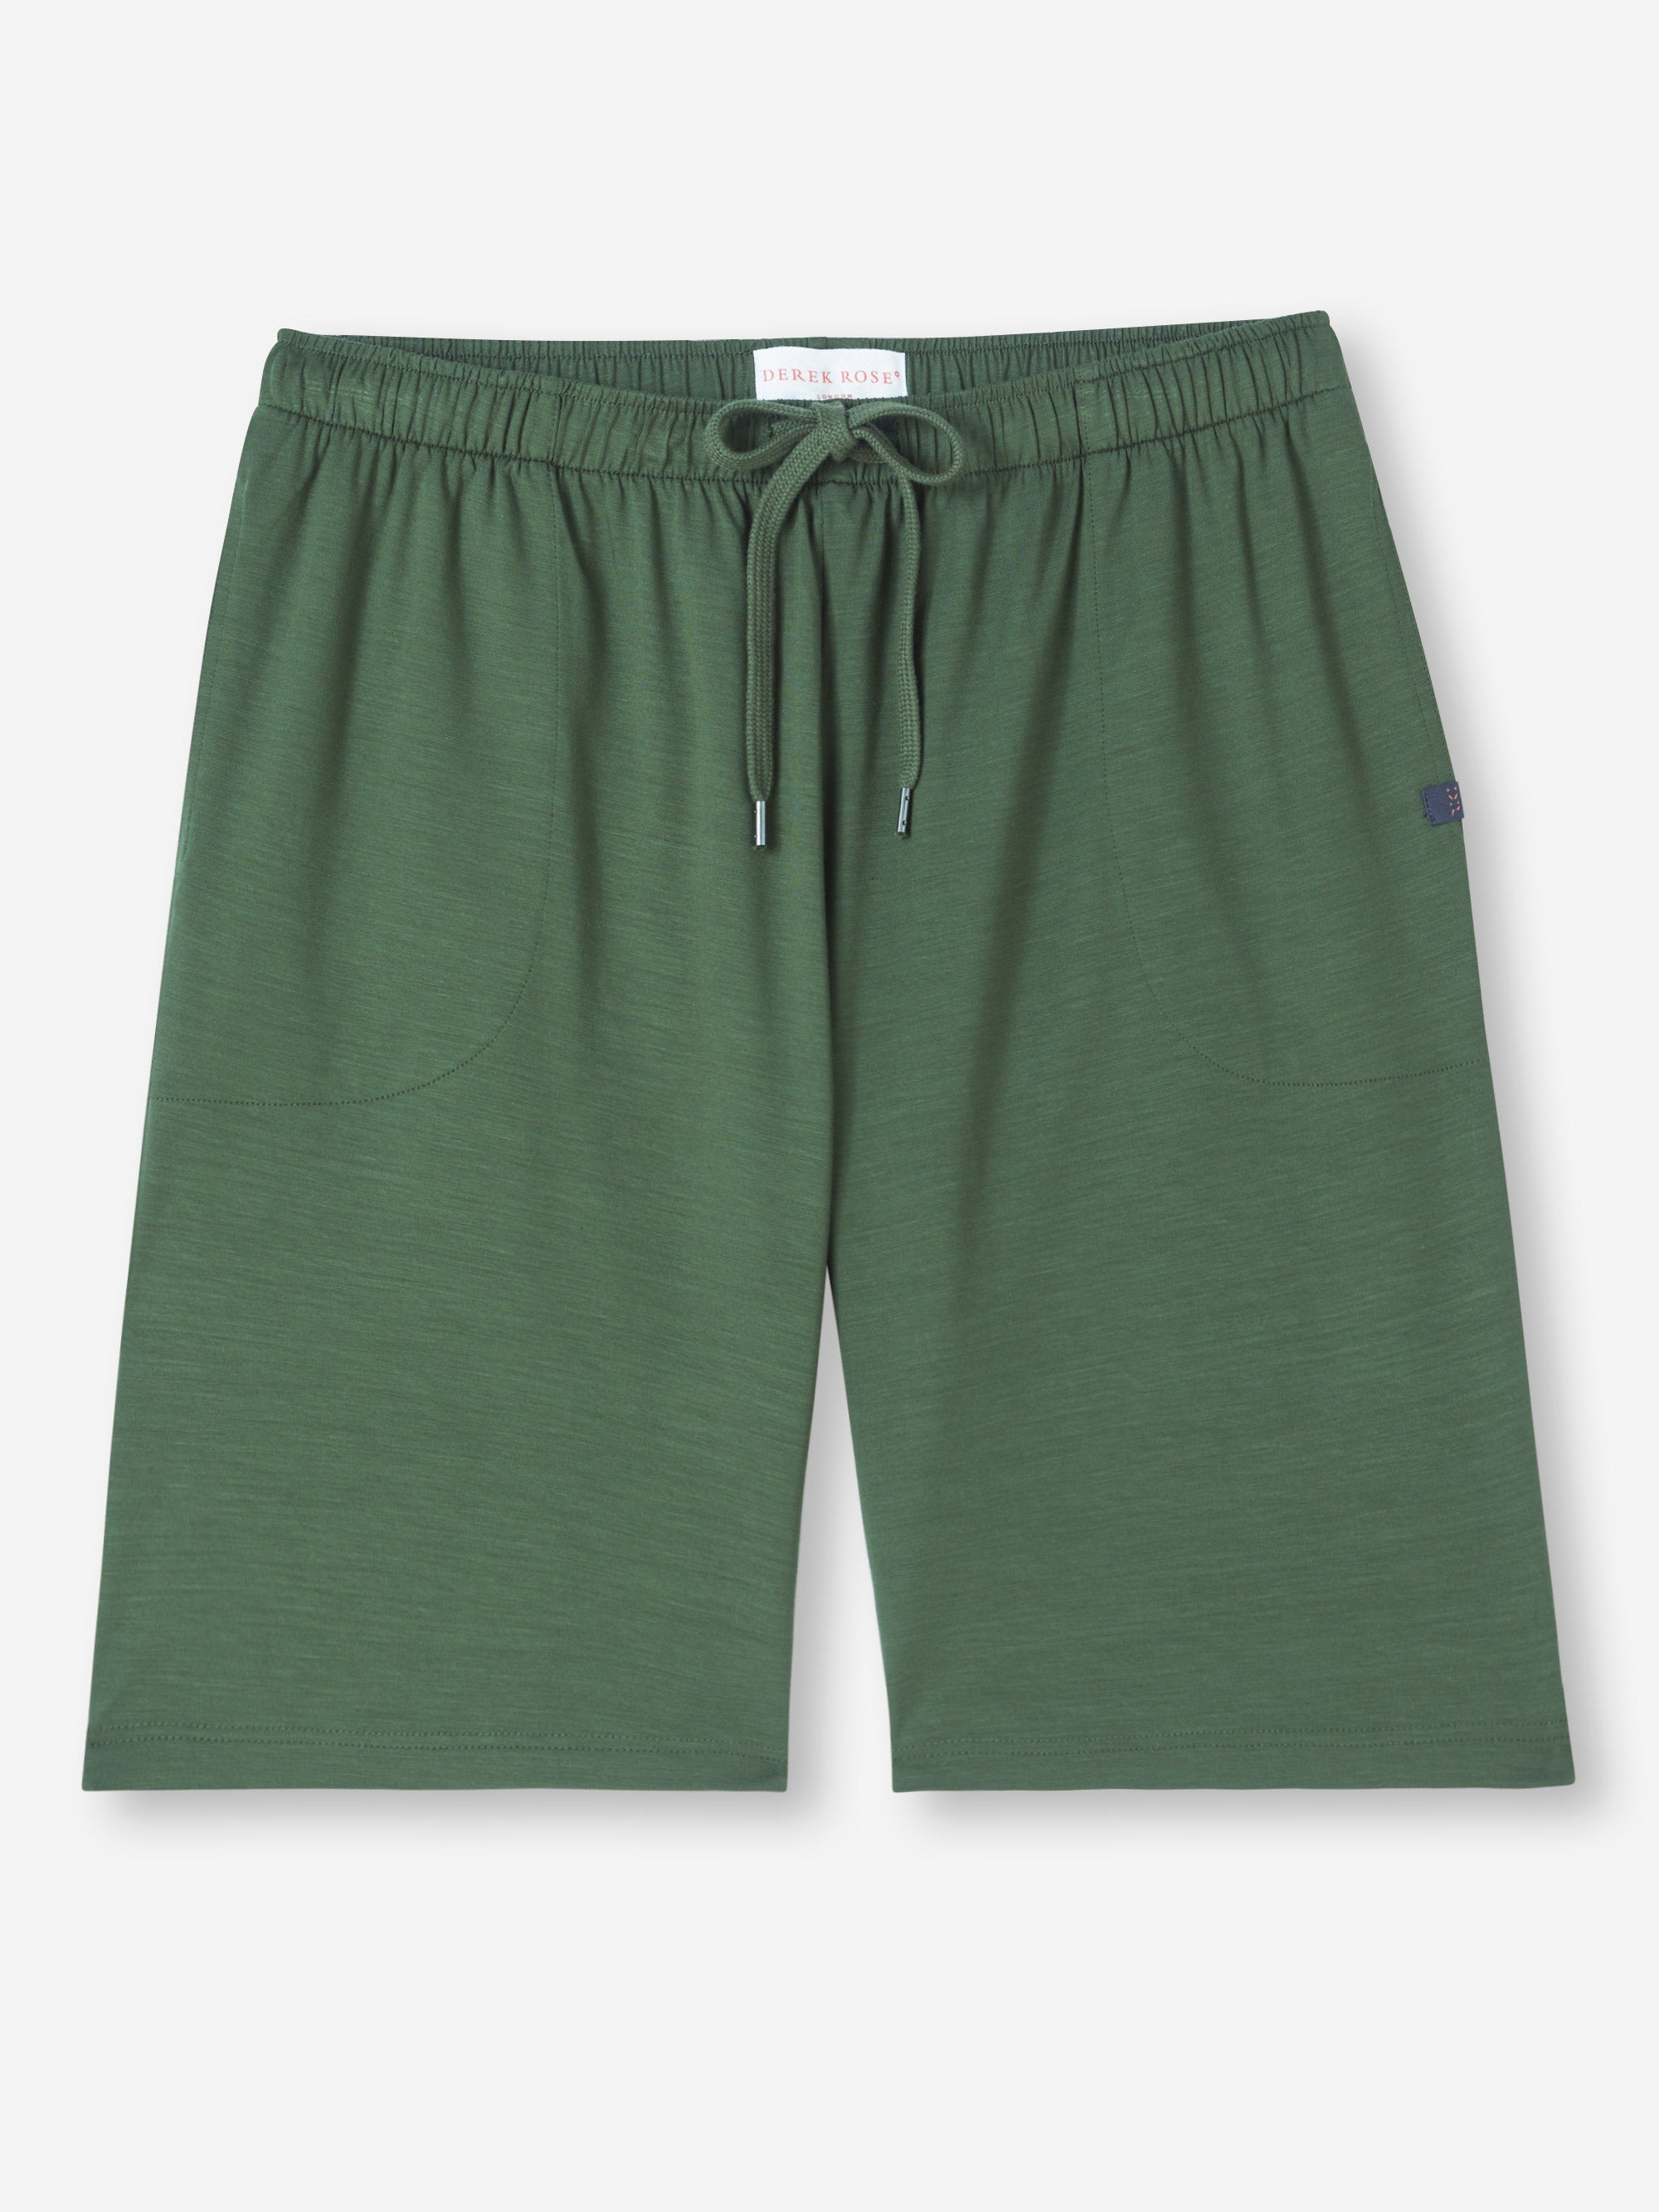 Men's Lounge Shorts Basel Micro Modal Stretch Hunter Green